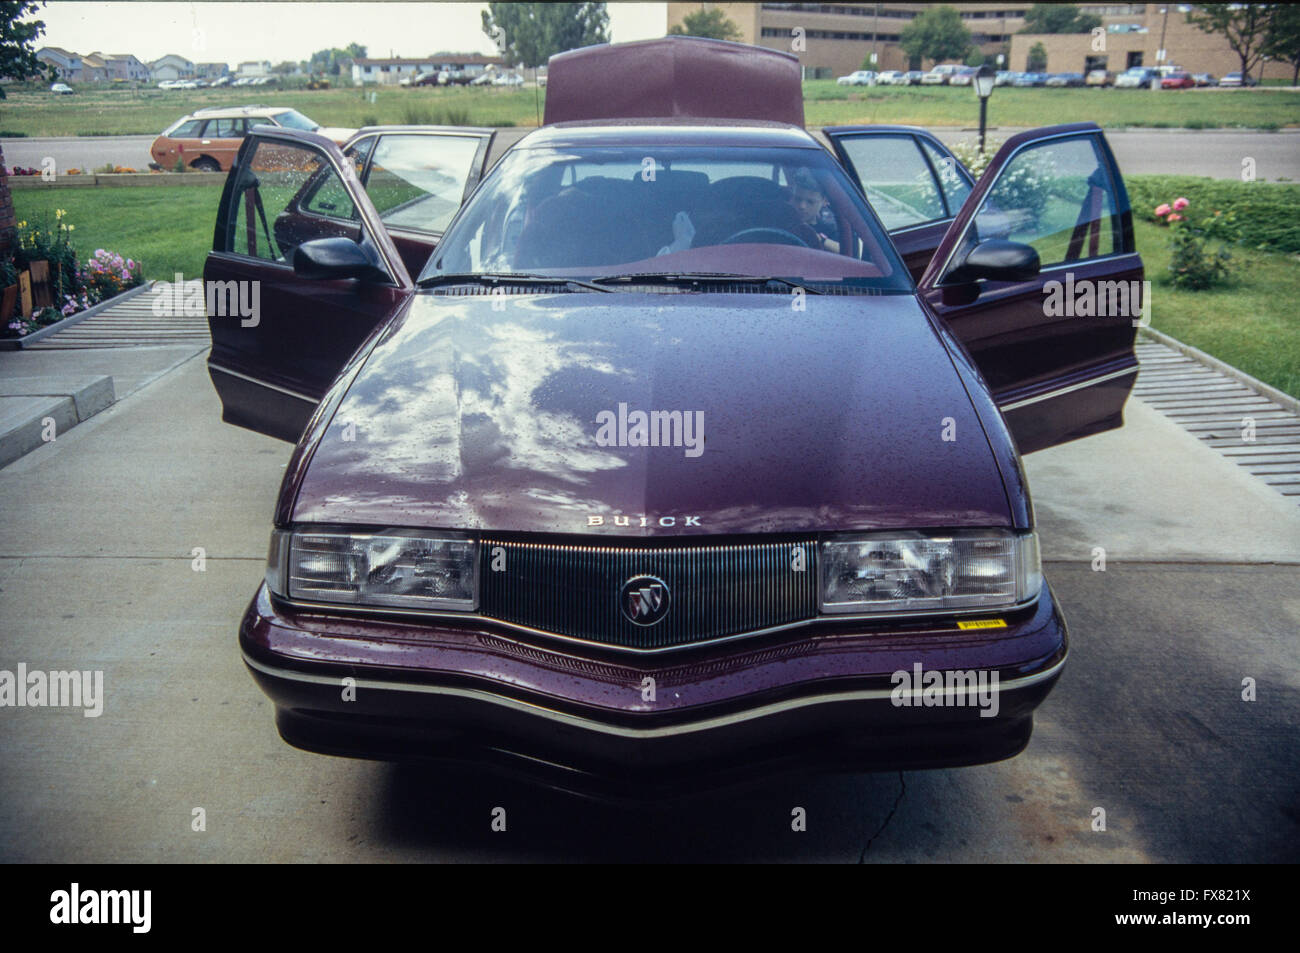 Archive image of a maroon 1992 model General Motors Buick Skylark compact 4-door sedan saloon car, USA, 1992, with doors and boot open Stock Photo